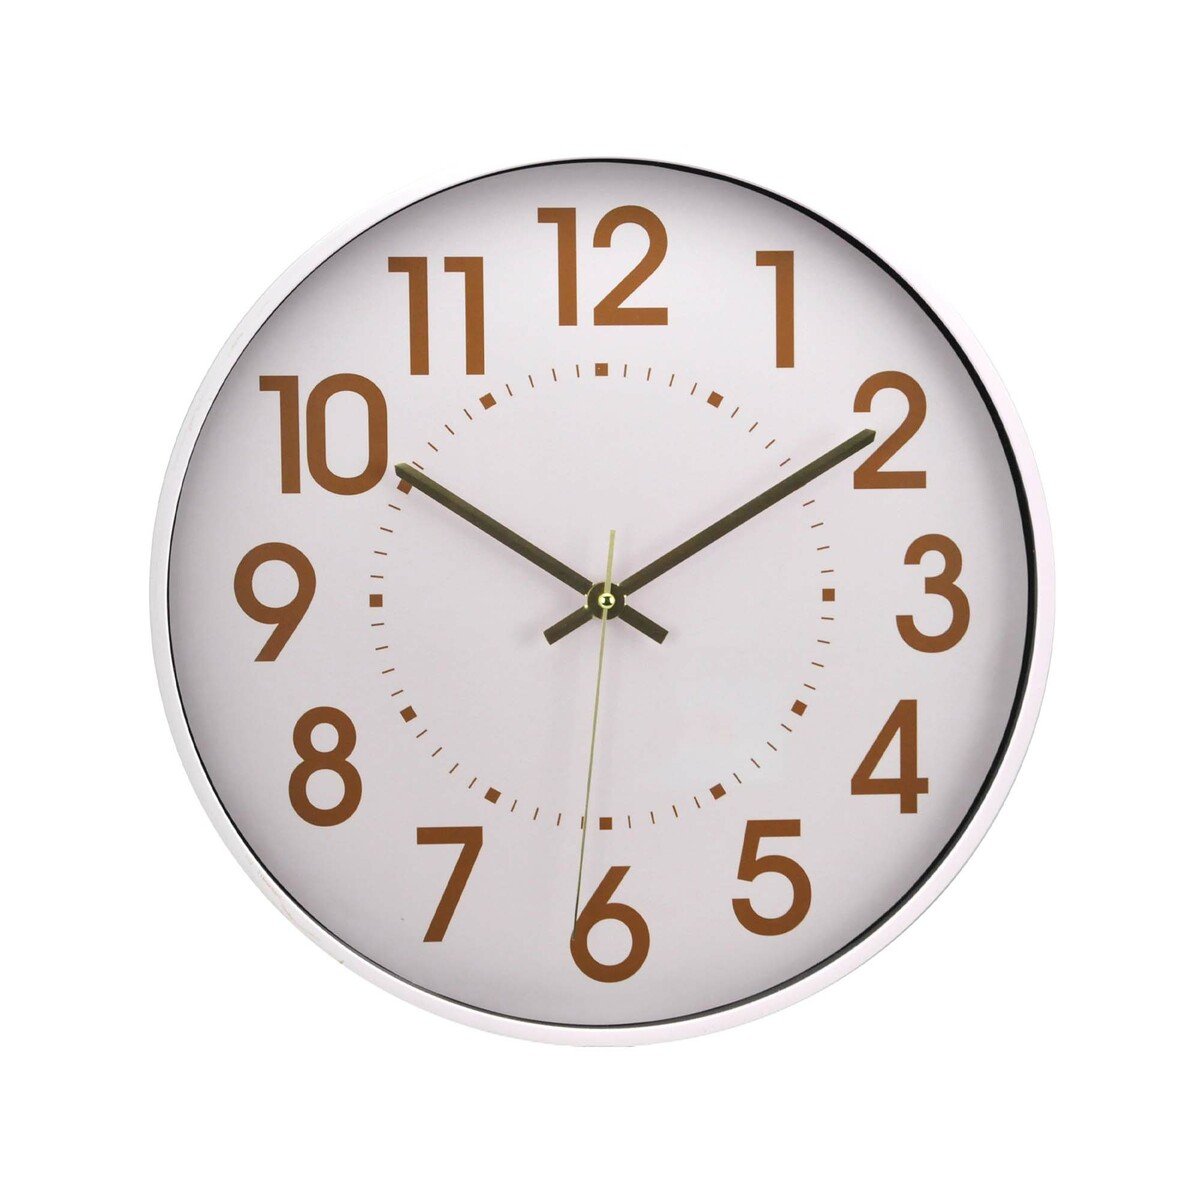 Eastime Wall Clock EG-6946E 40cm Assorted